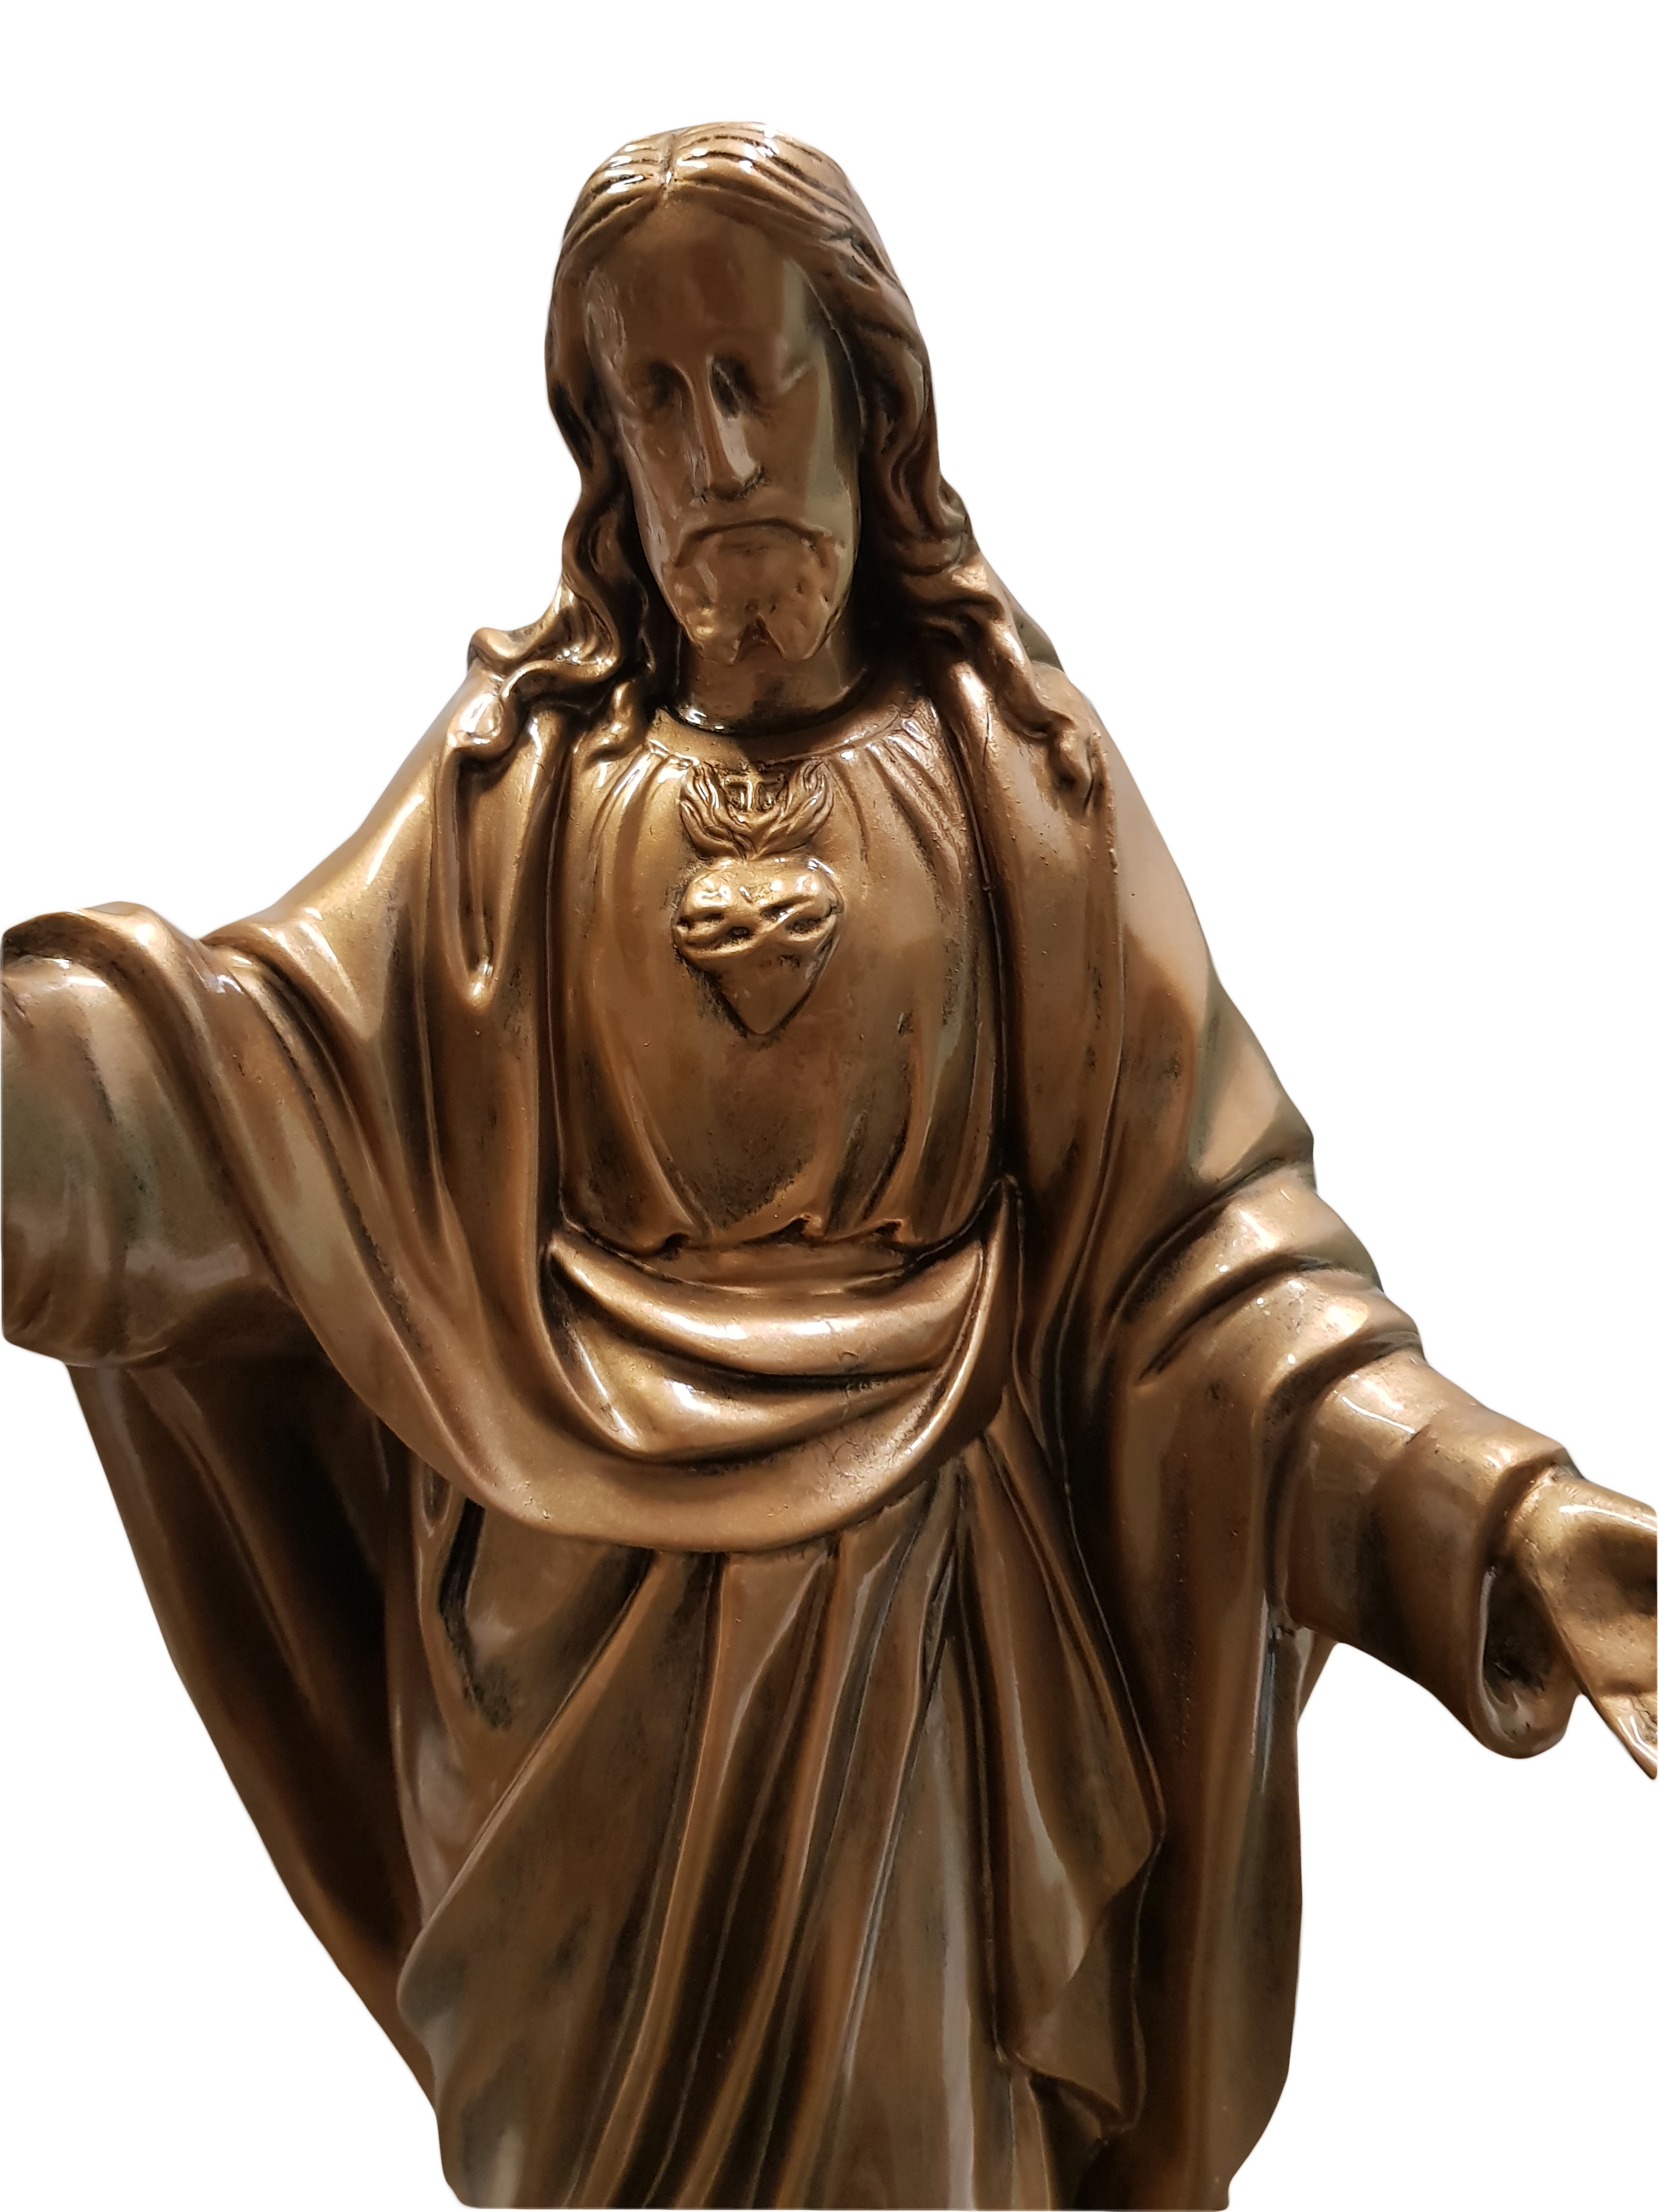 Serce Jezusa - Figura nagrobna - 66 cm - R 135